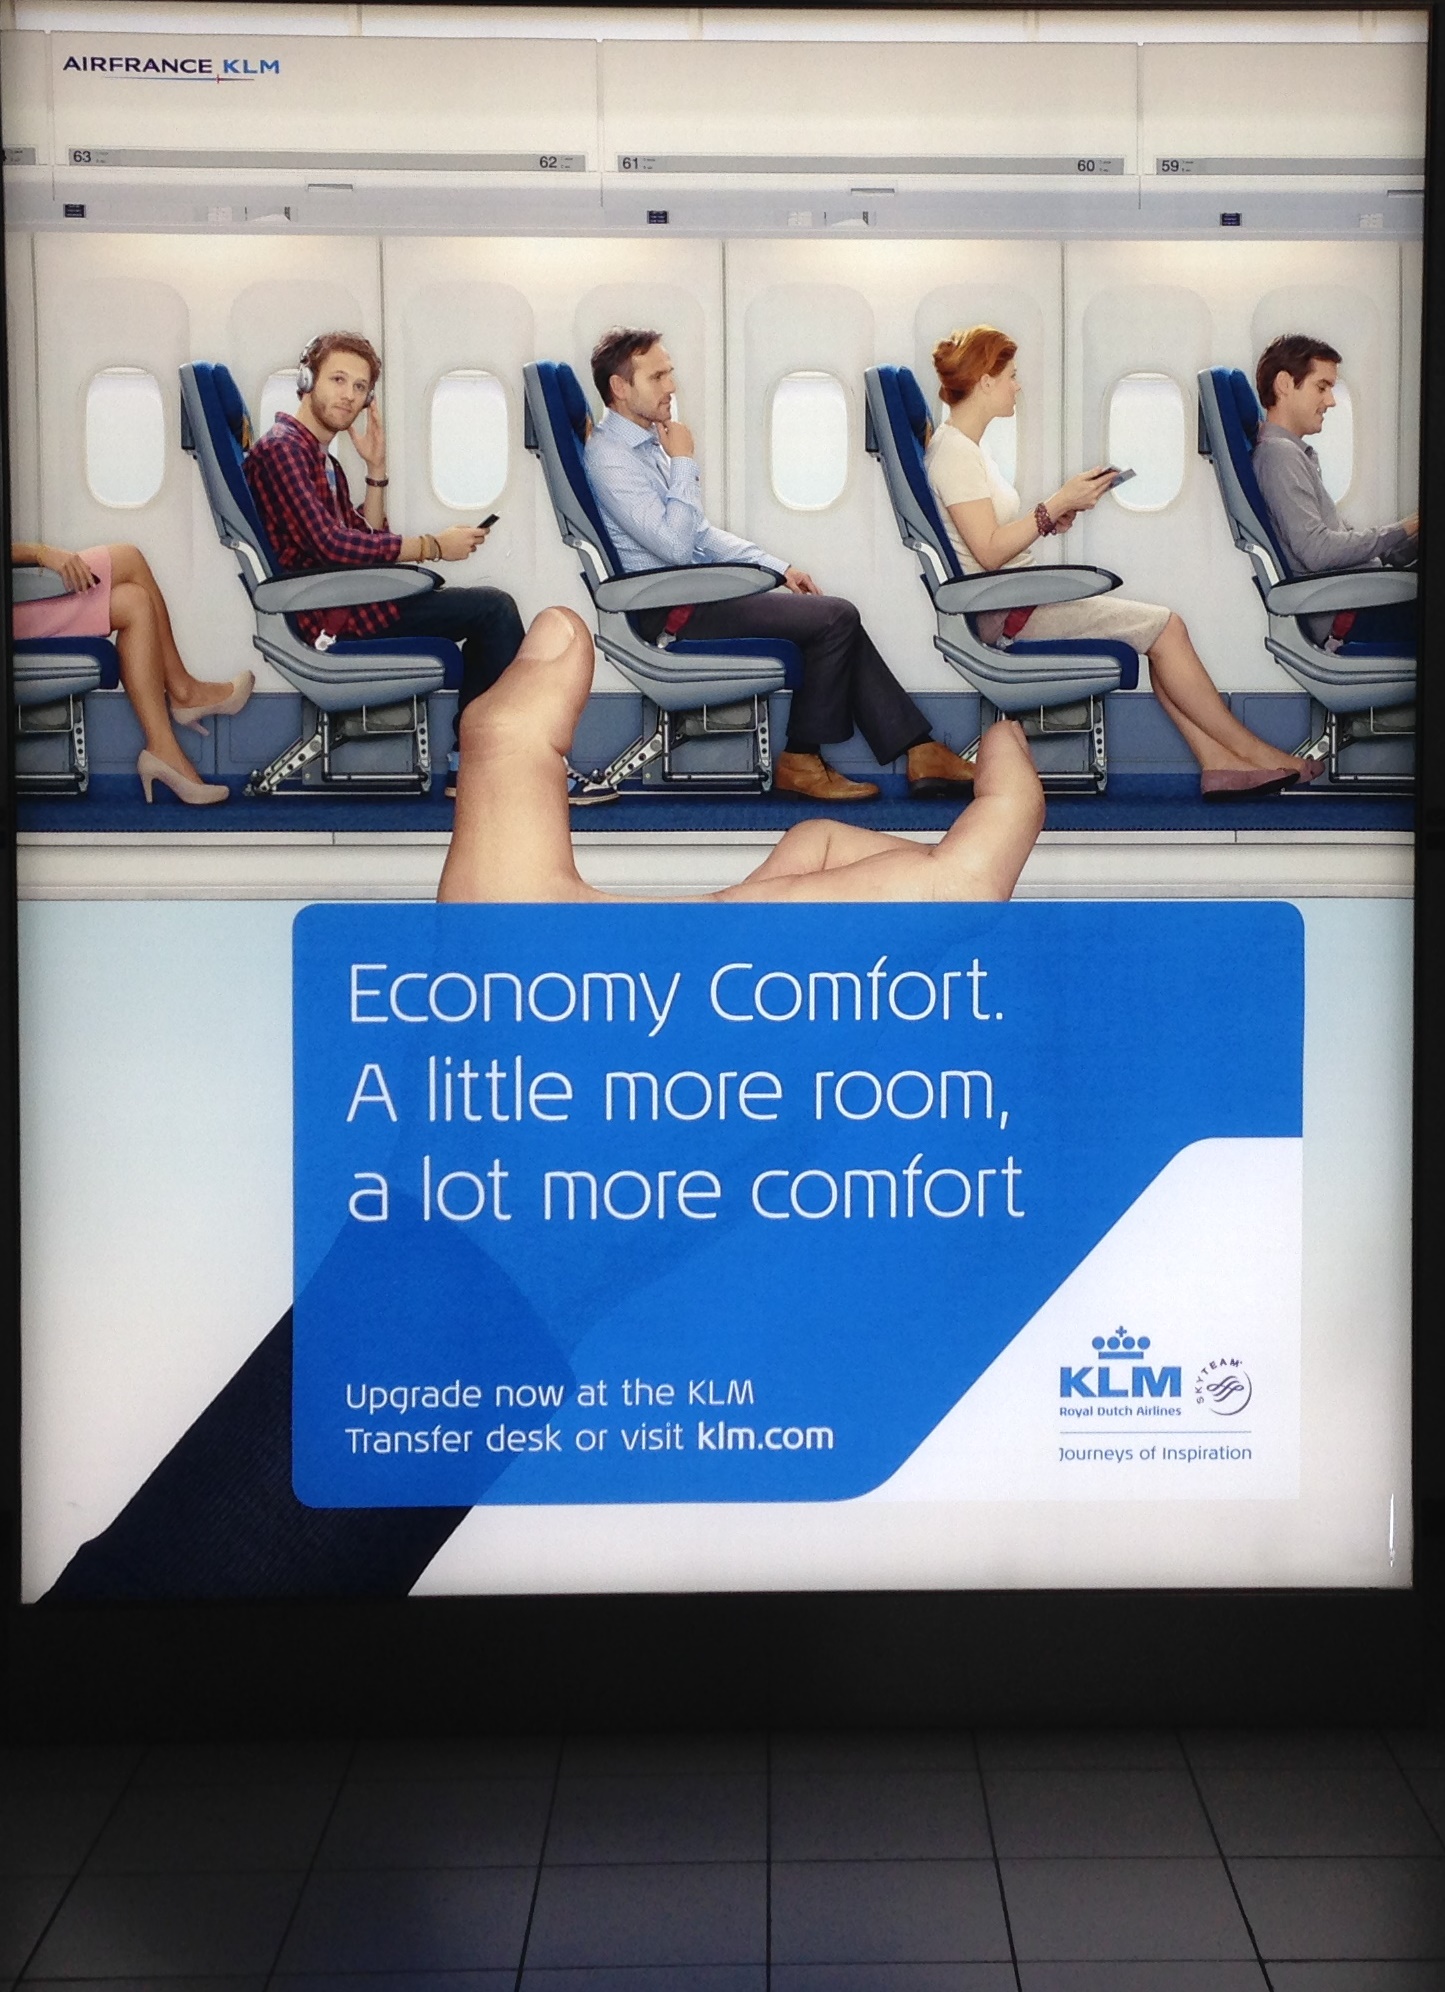 KLM_Economy Comfort Ad_Amsterdam Schiphol Airport